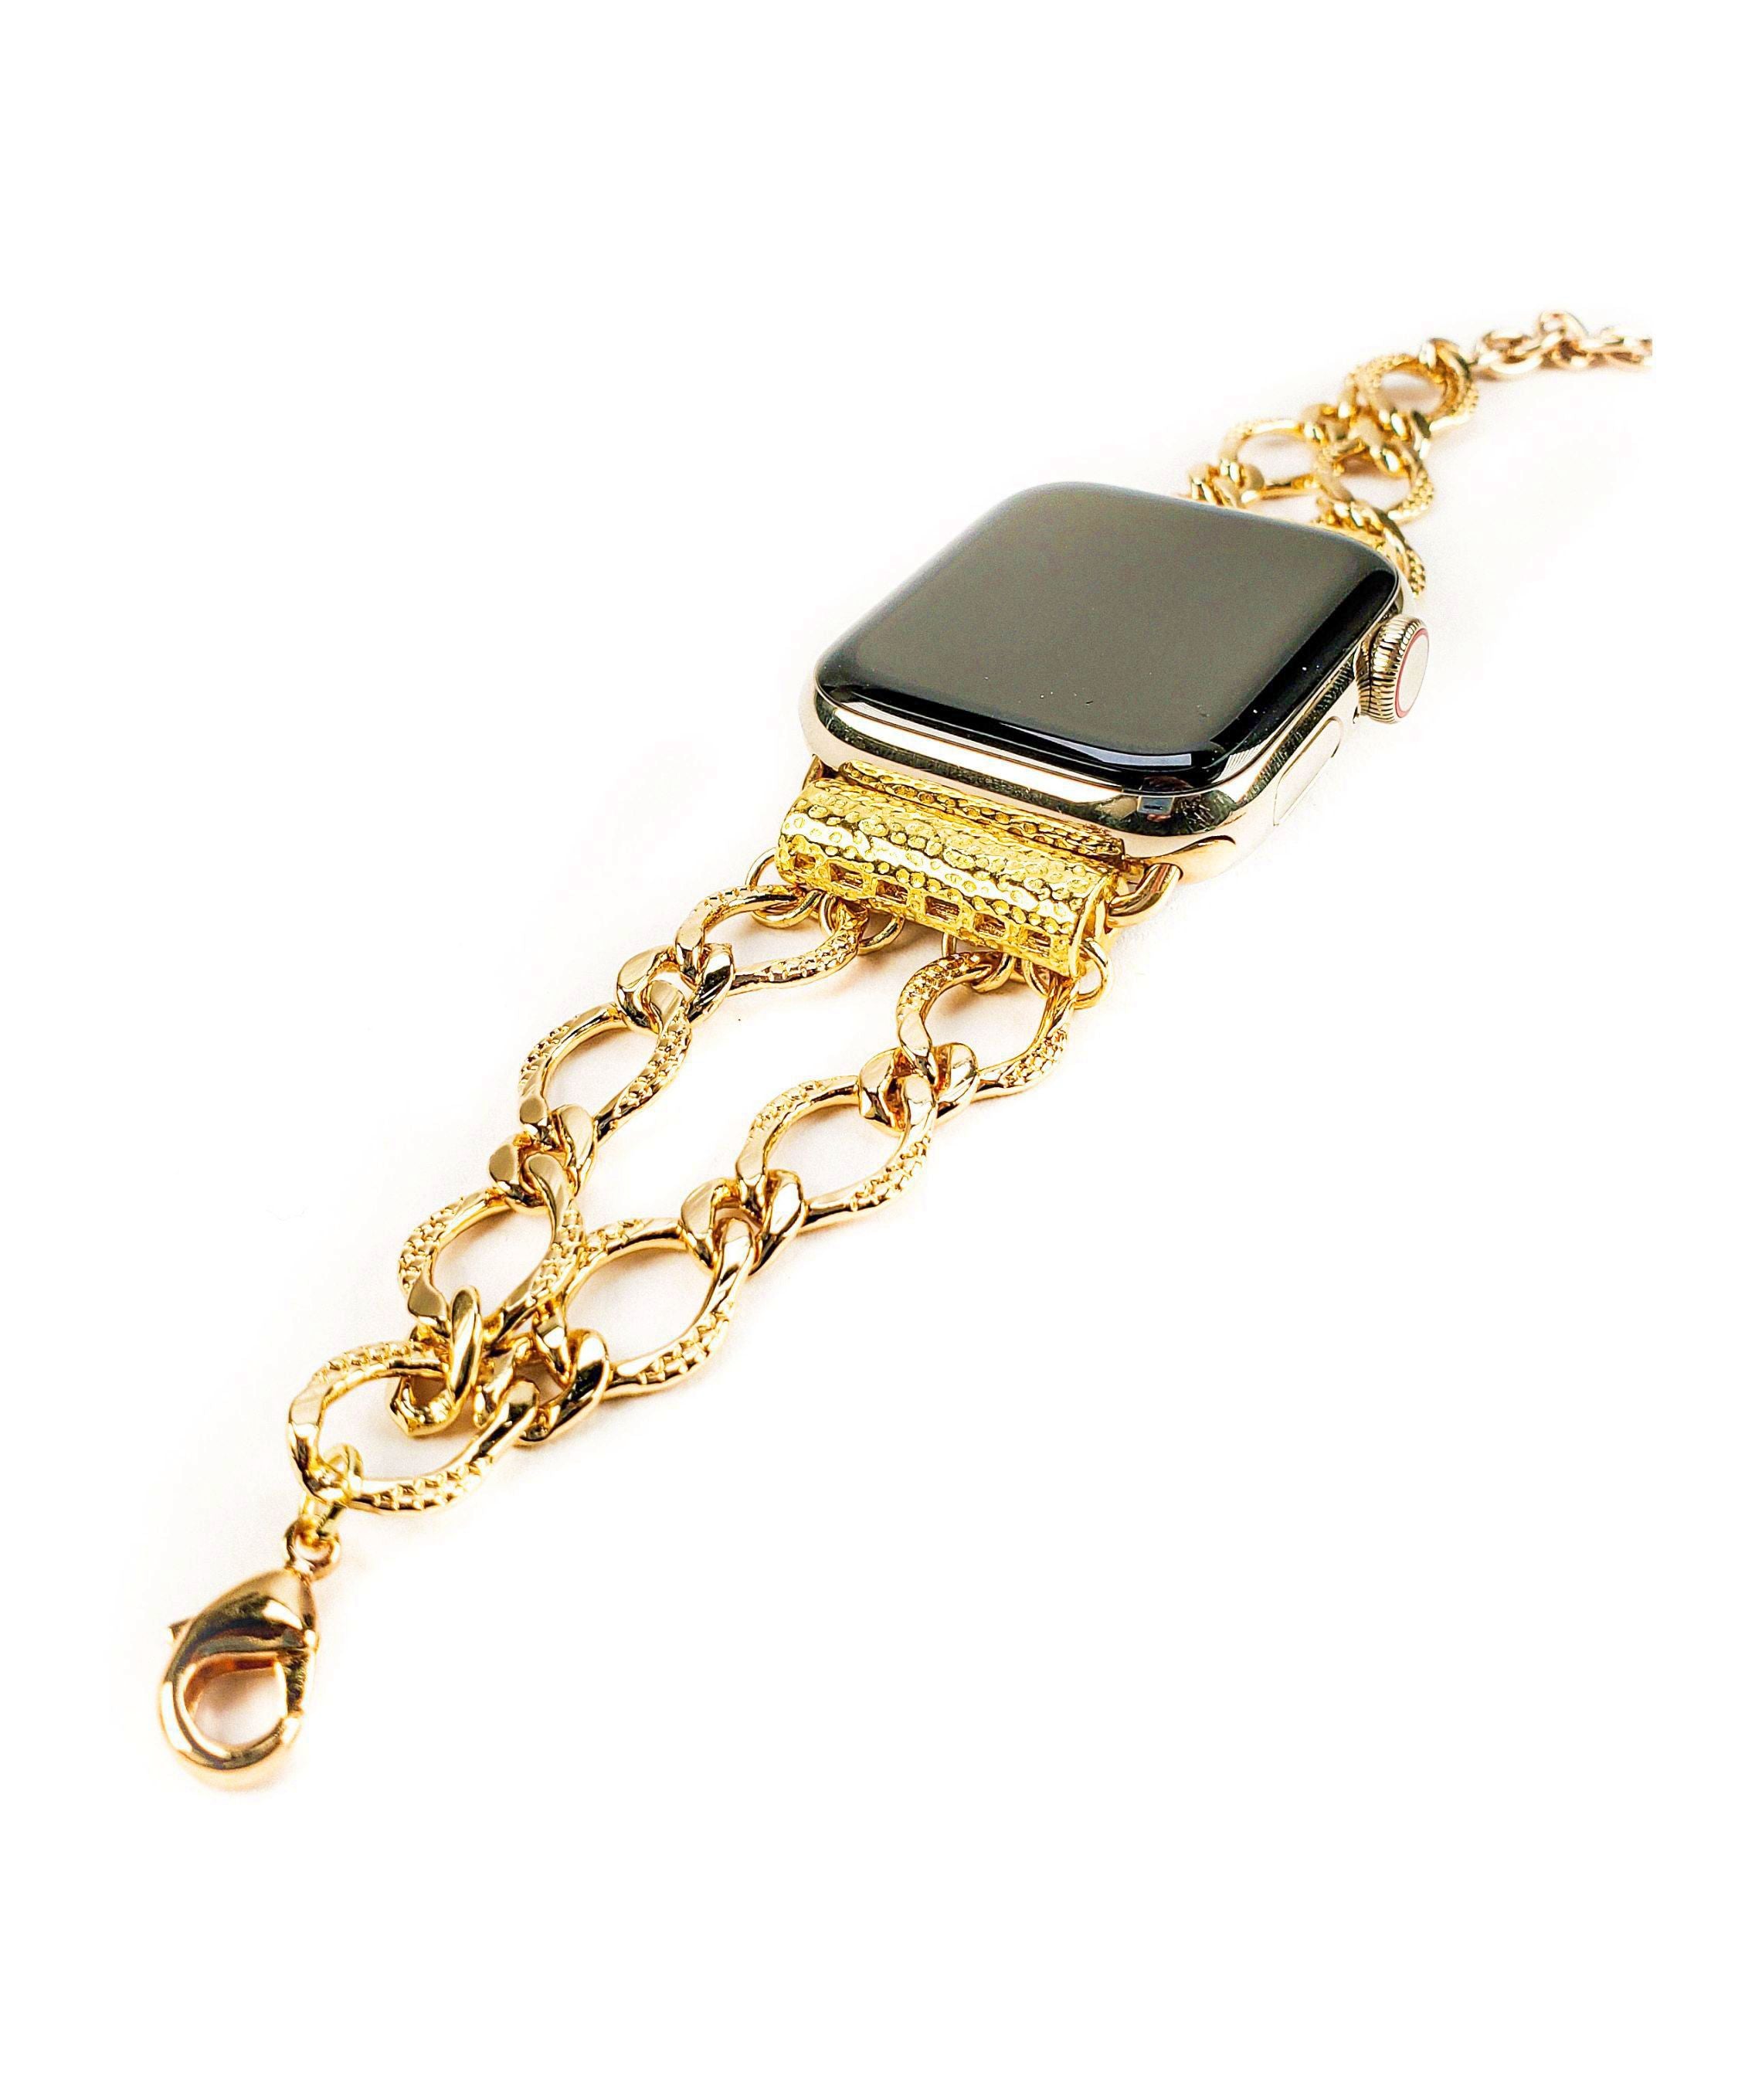 BIGLUP Gold Chain Watch Bracelet Band